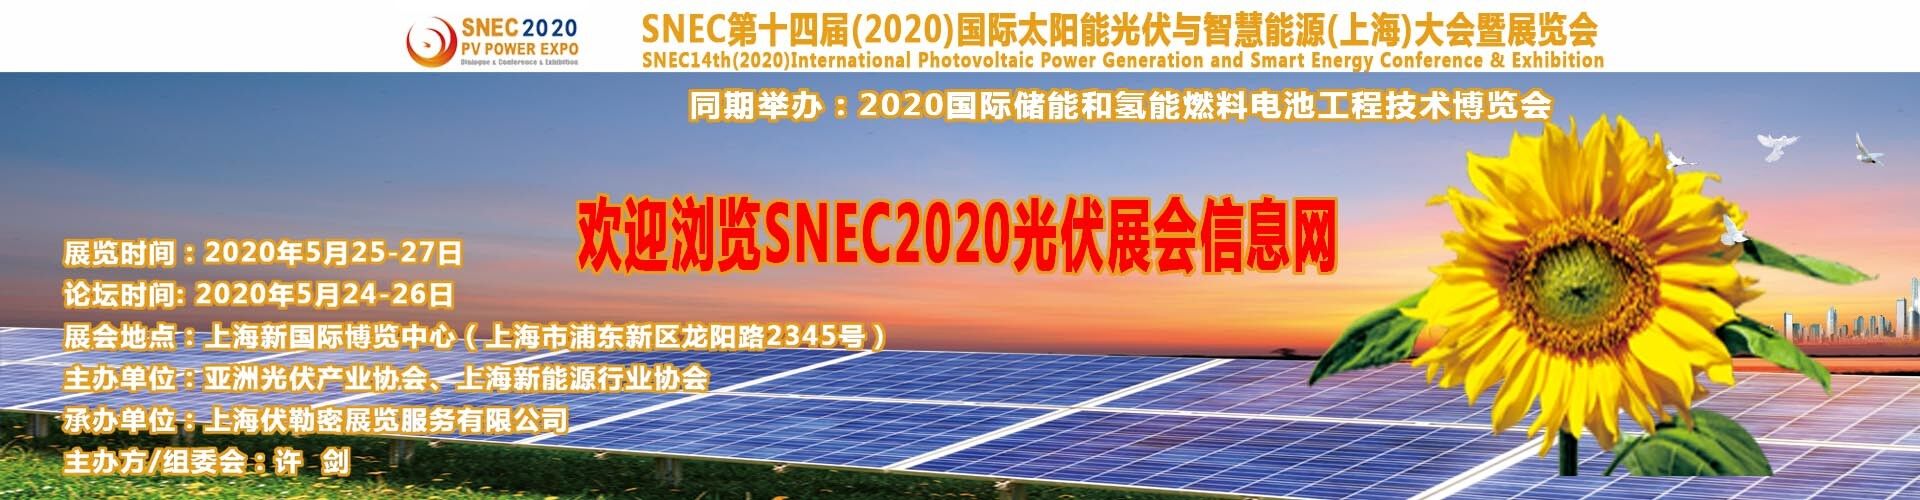 SNEC太陽能展網址/2018SNEC光伏展會在上海什么地方/SNEC 2018上海太陽能展會/